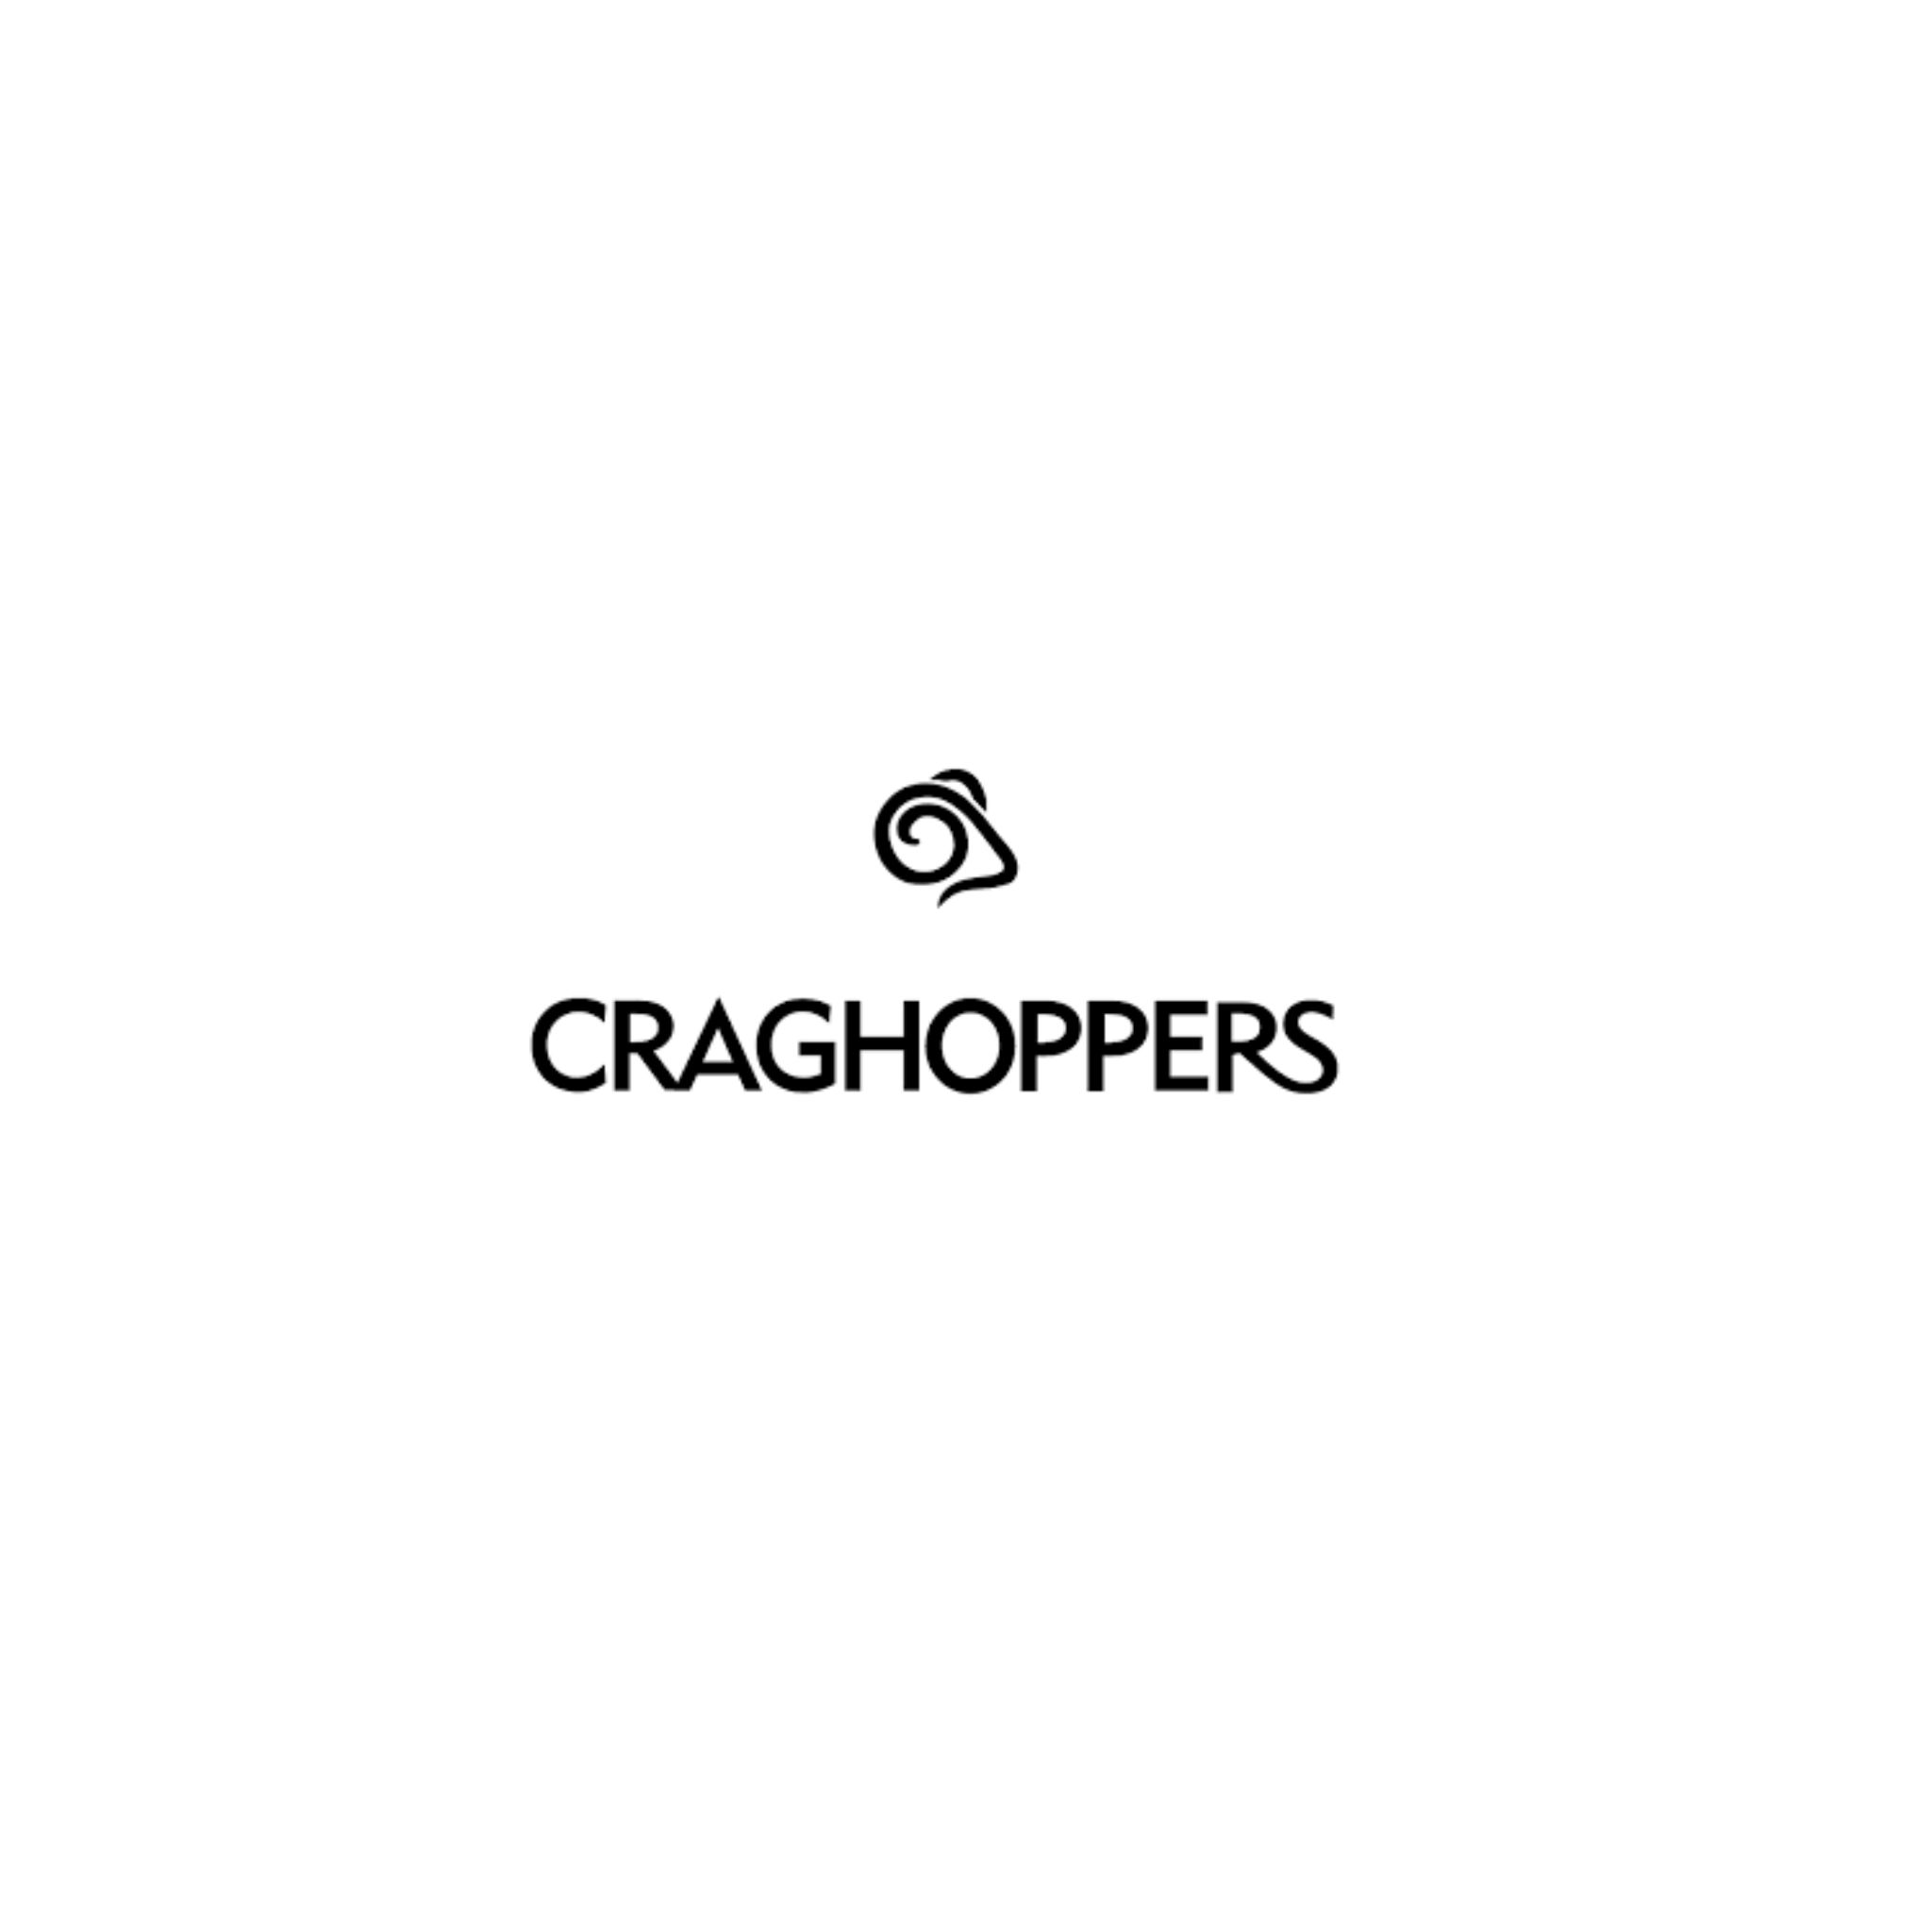 Craghoppers Expert Workwear Brand Logo